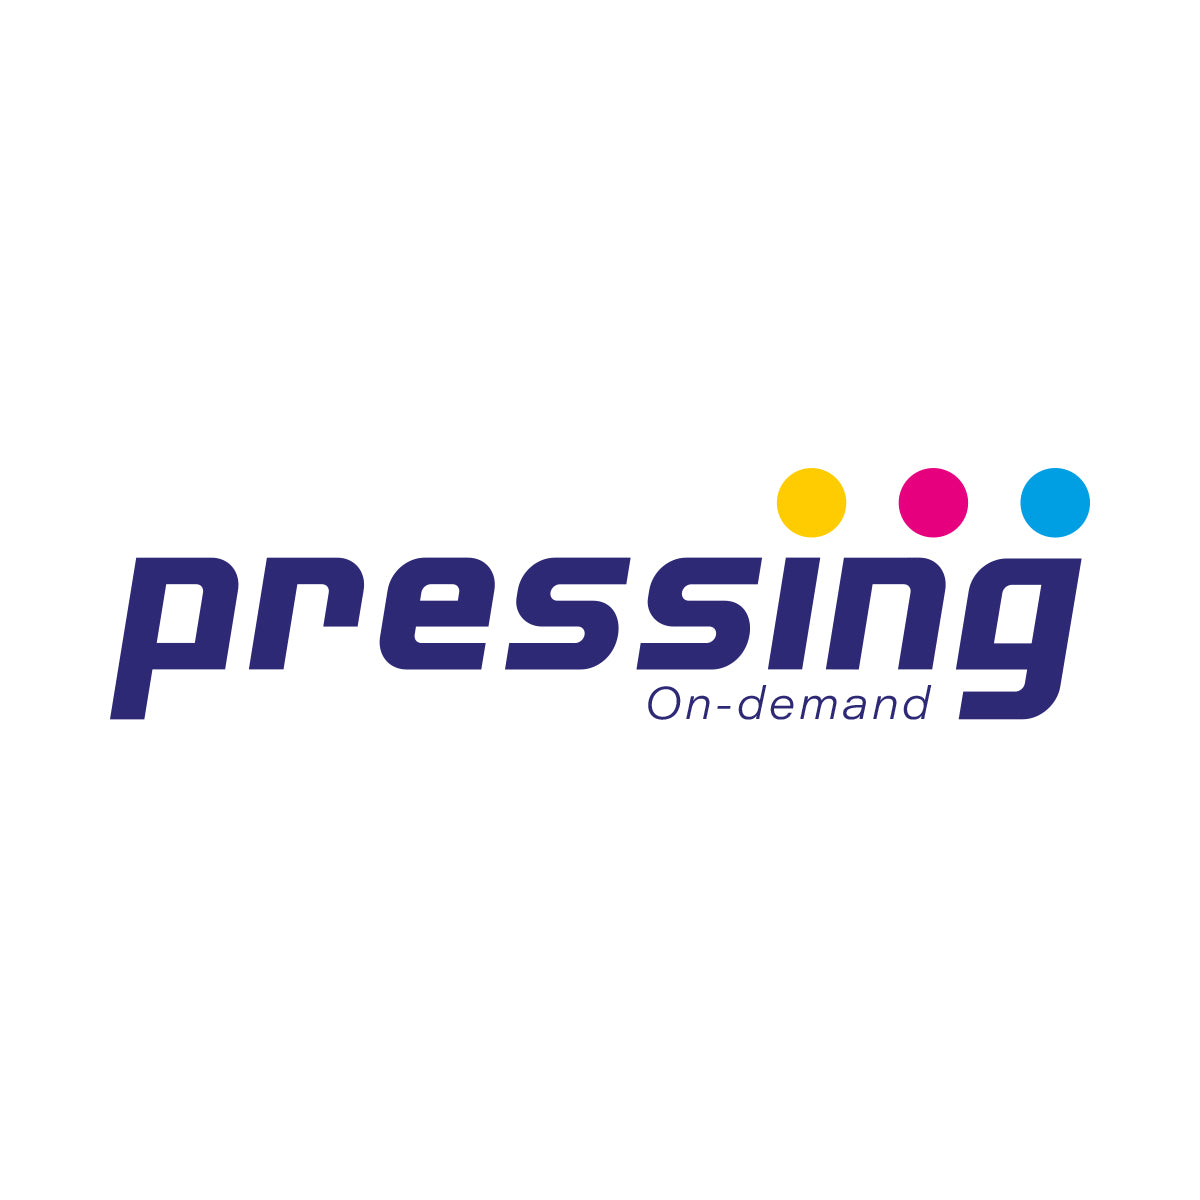 Pressing on‑demand